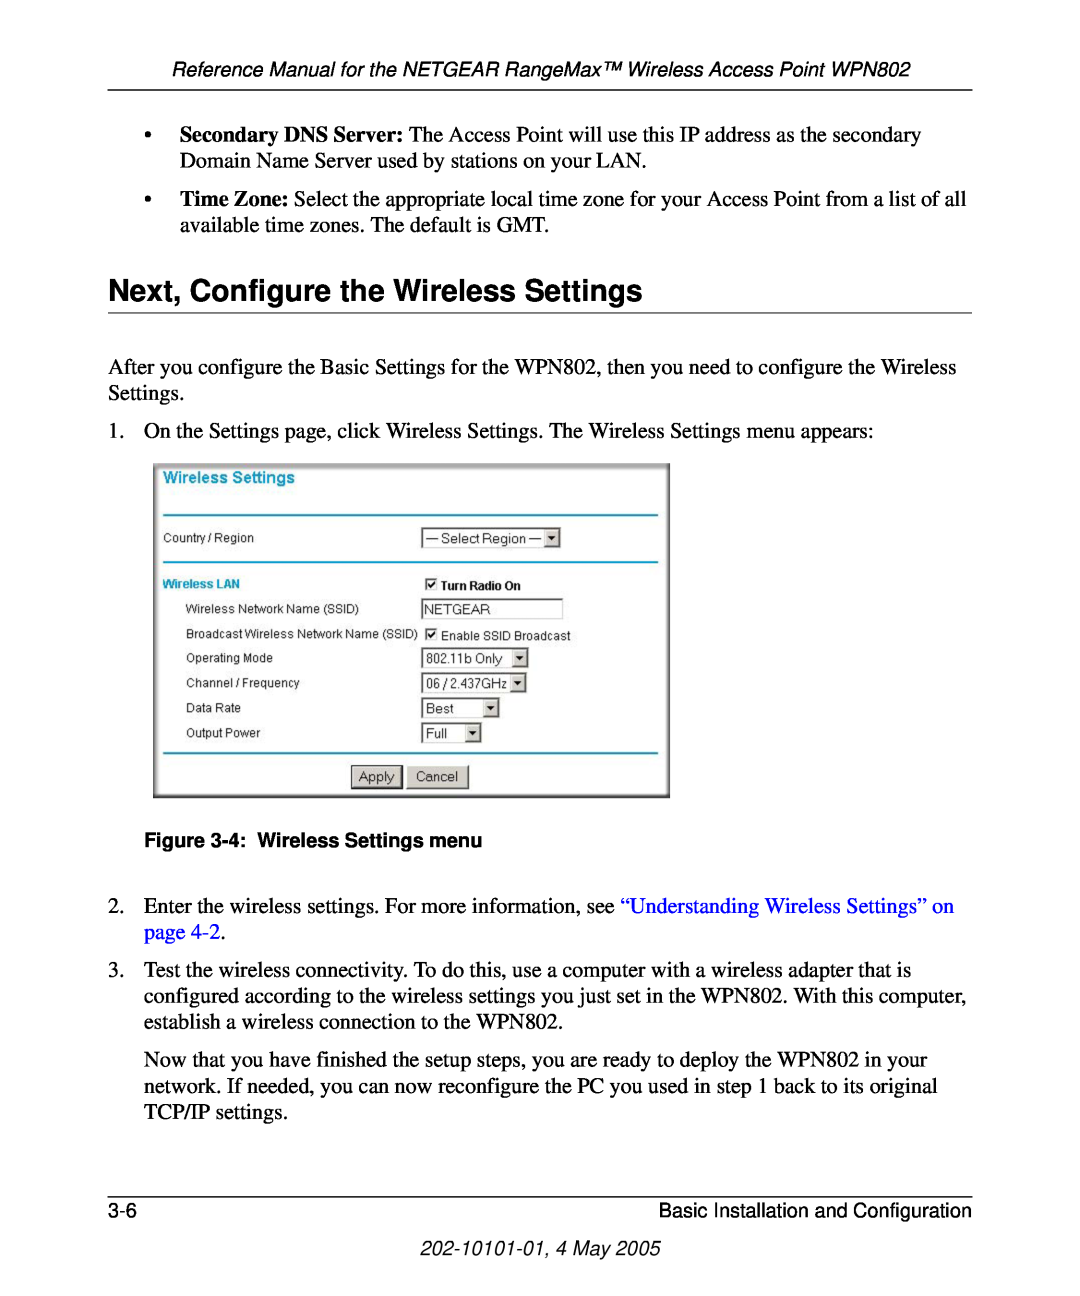 NETGEAR WPN802 manual Next, Configure the Wireless Settings, 4 Wireless Settings menu 